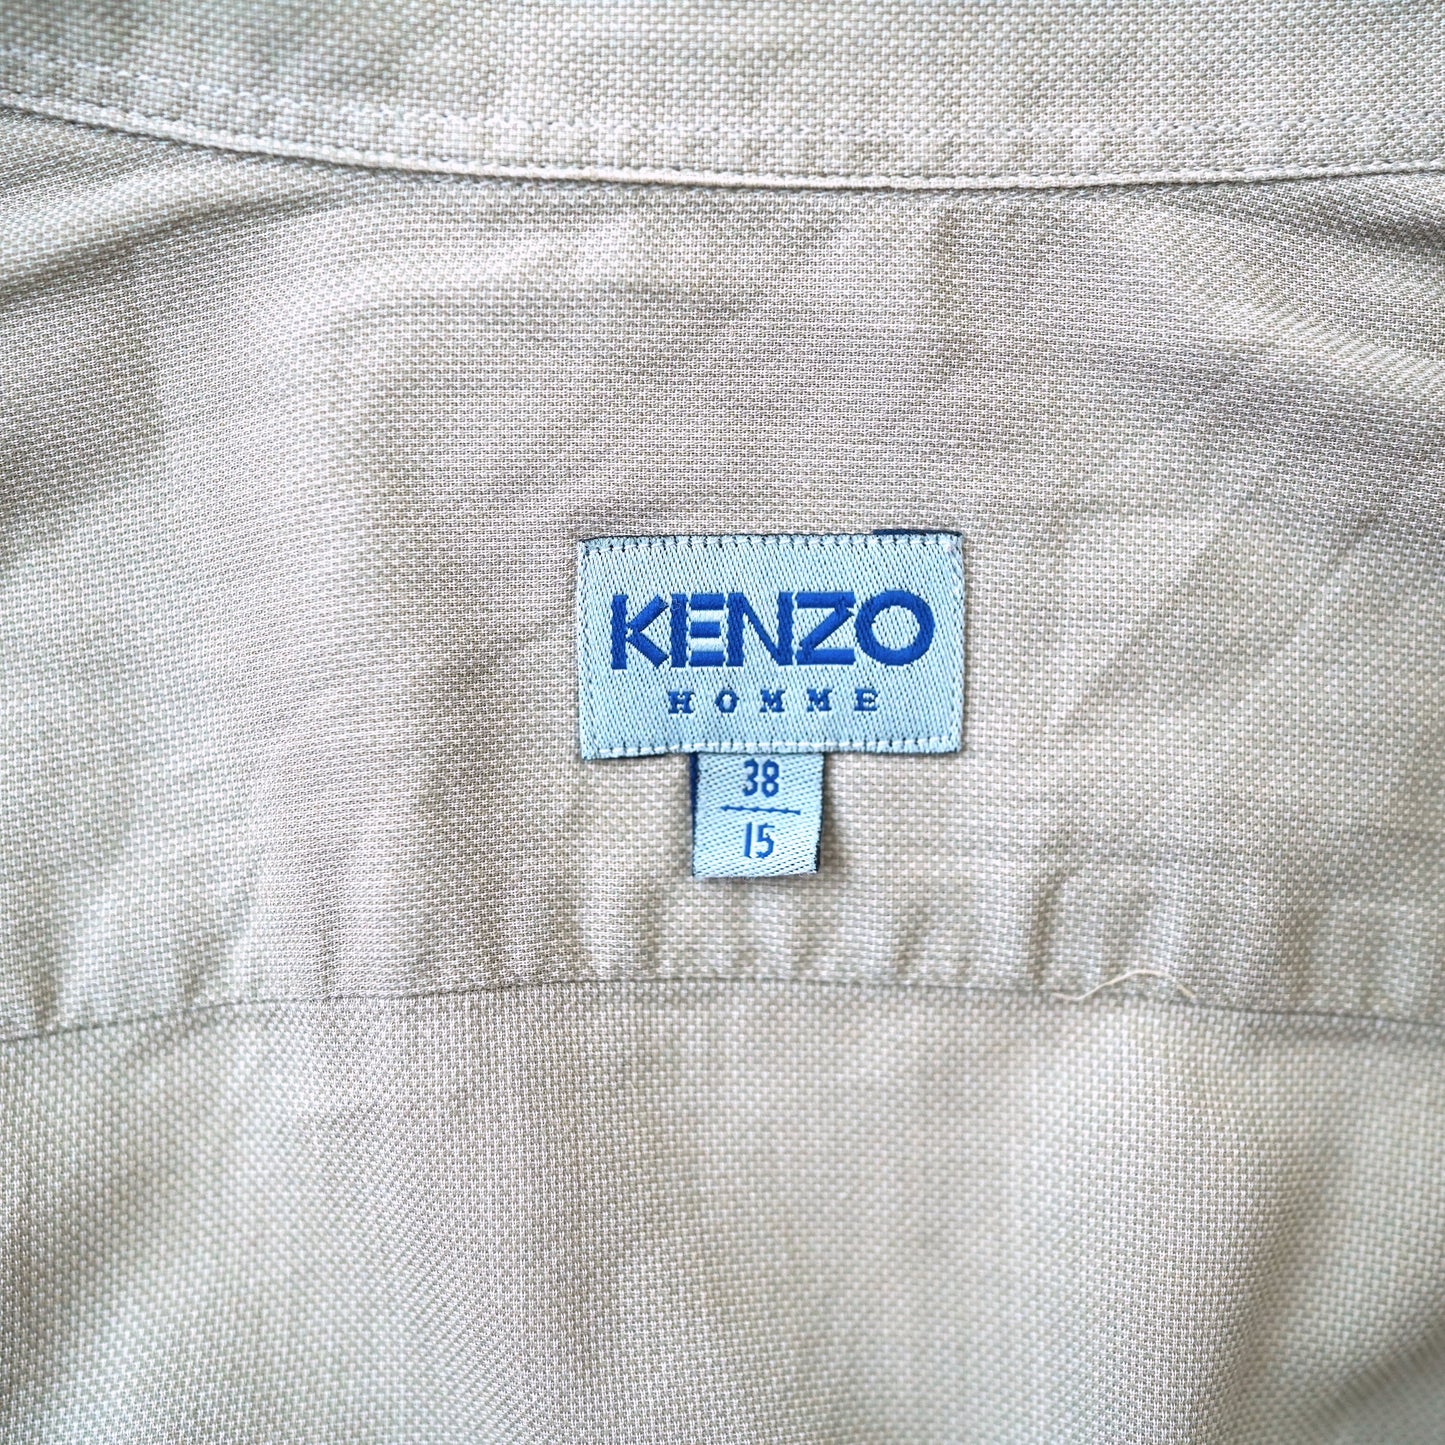 KENZO shirt